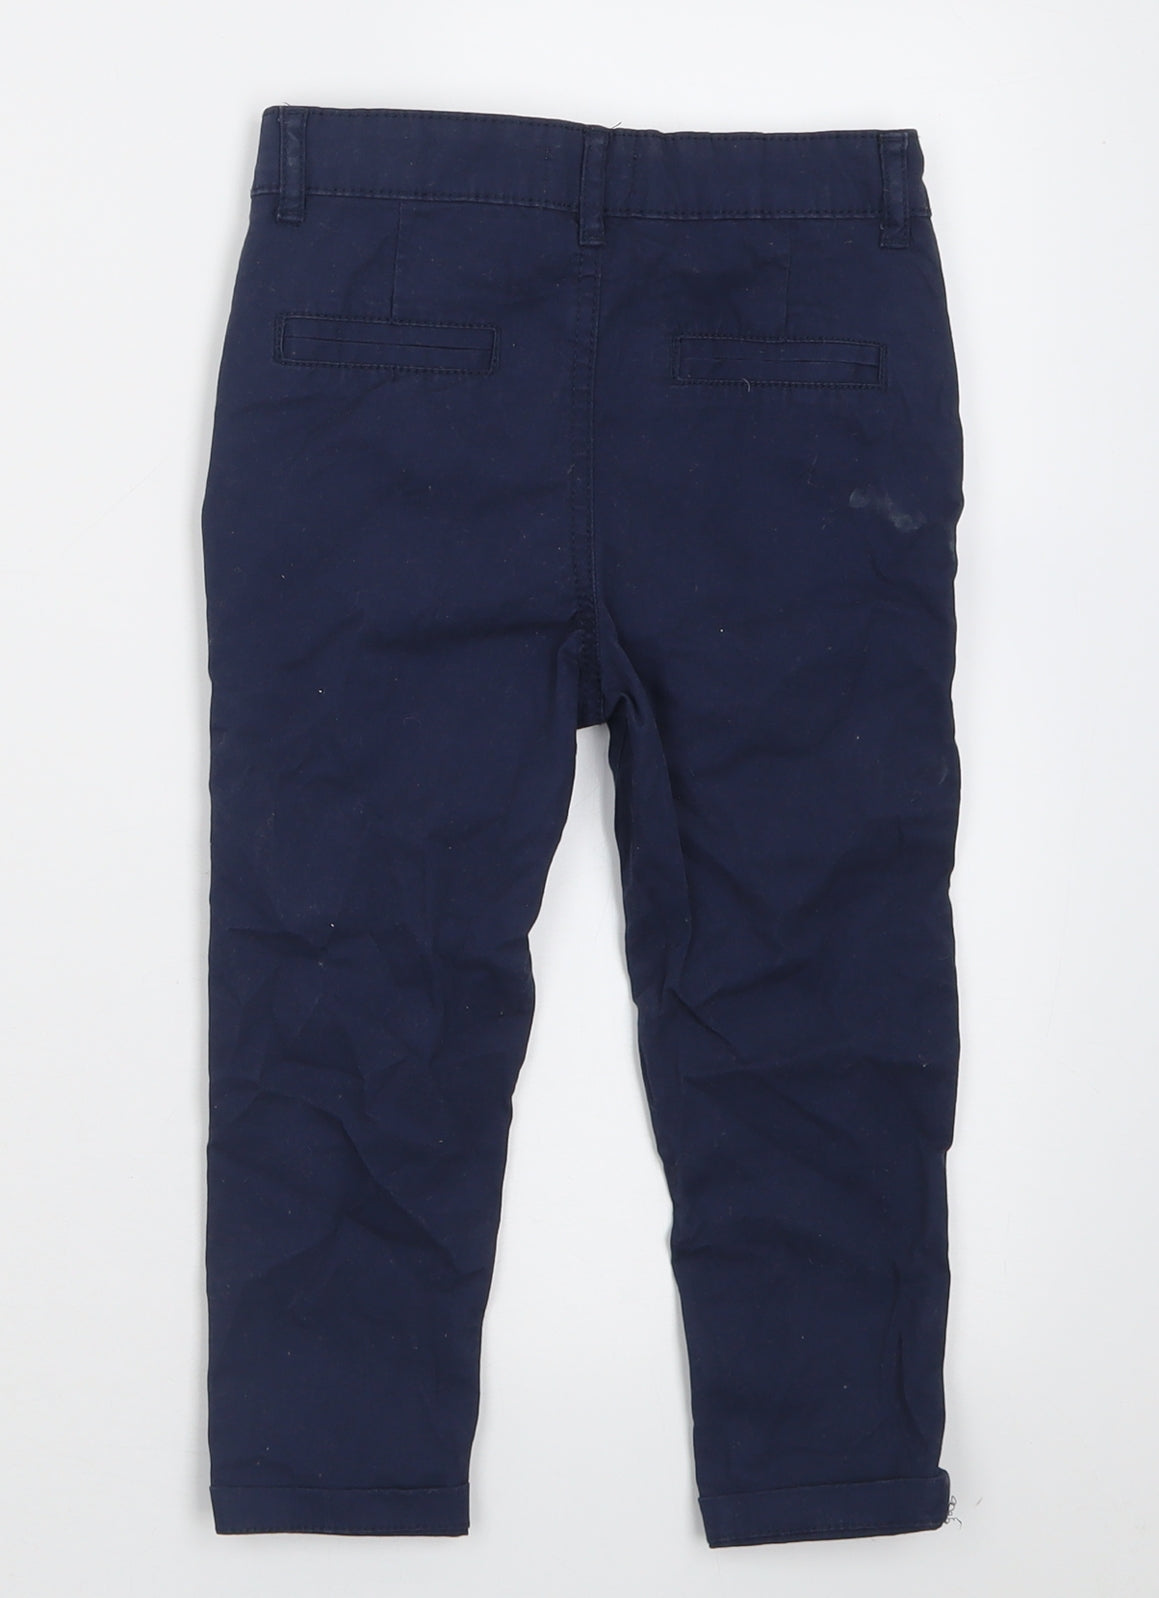 Primark Boys Blue  Cotton Capri Trousers Size 2 Years  Regular Button